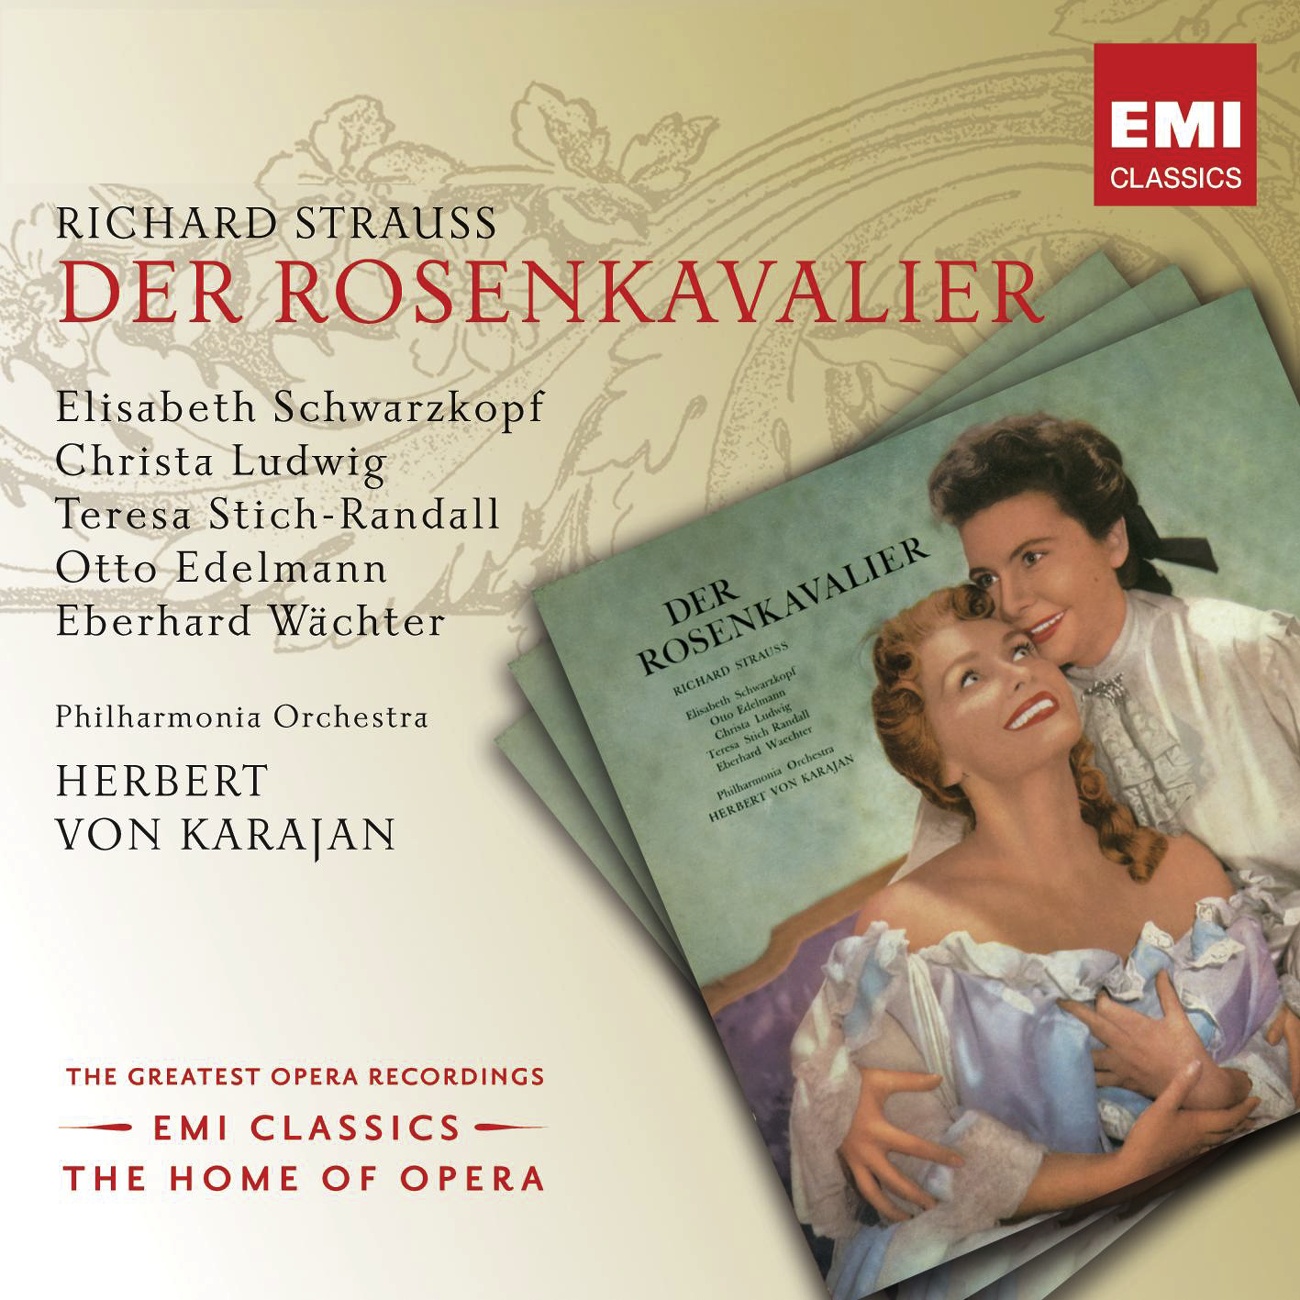 Der Rosenkavalier (2001 Digital Remaster), Act III: Die schöne Musi! (Octavian/Ochs)